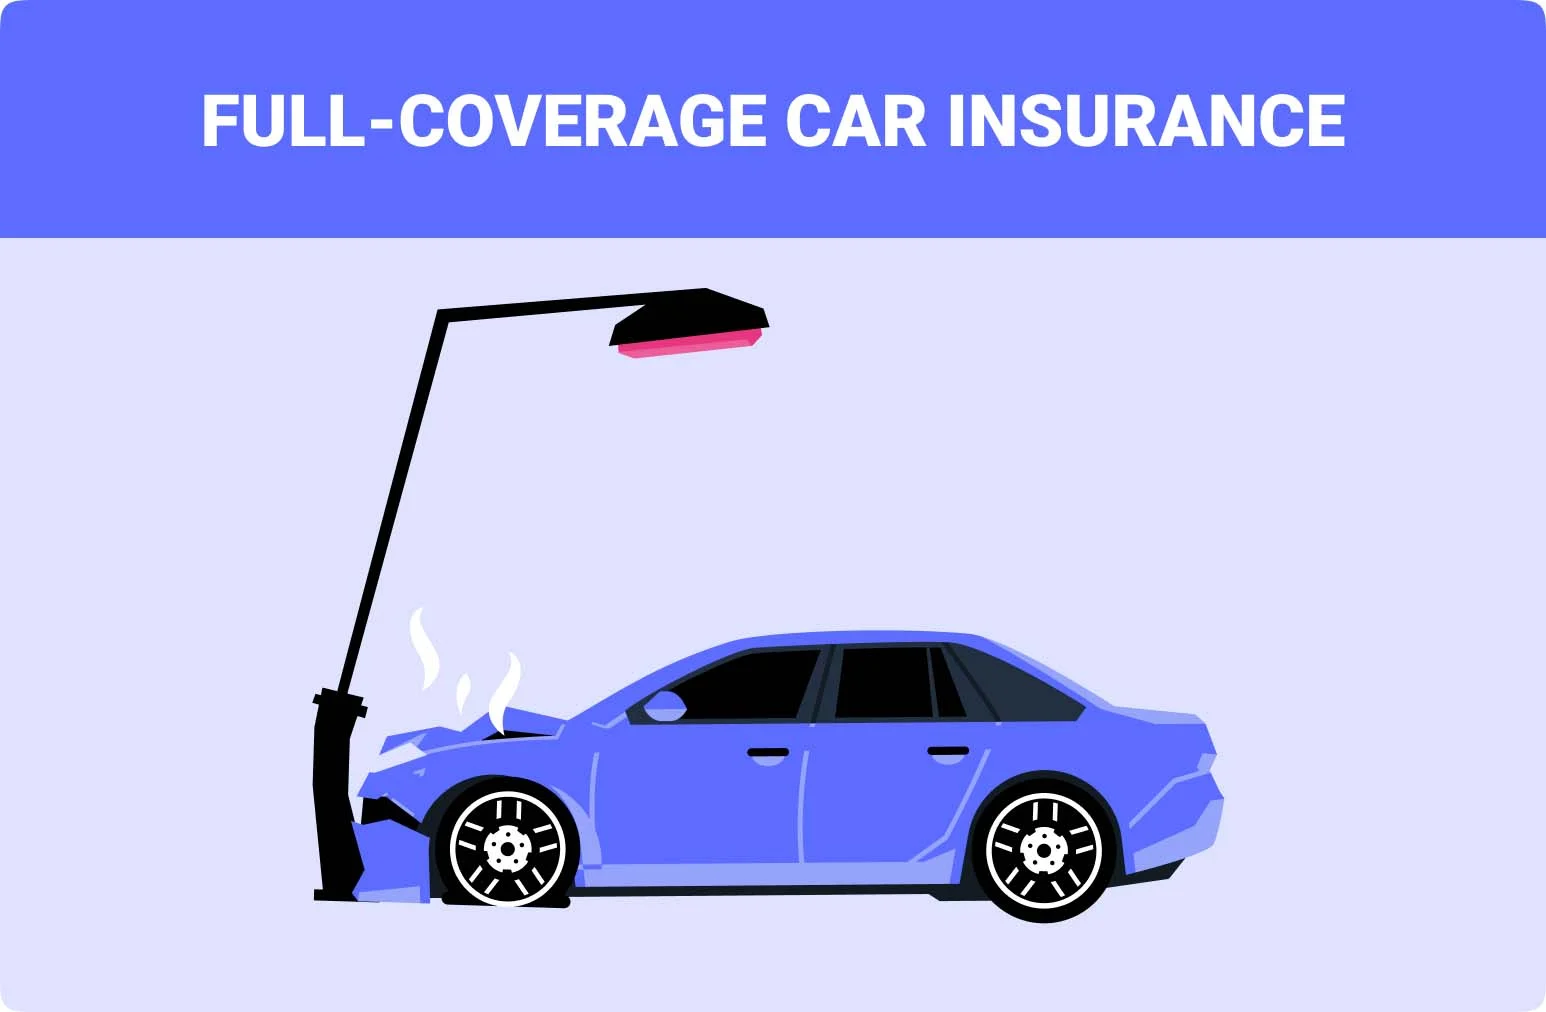 Full-coverage car insurance